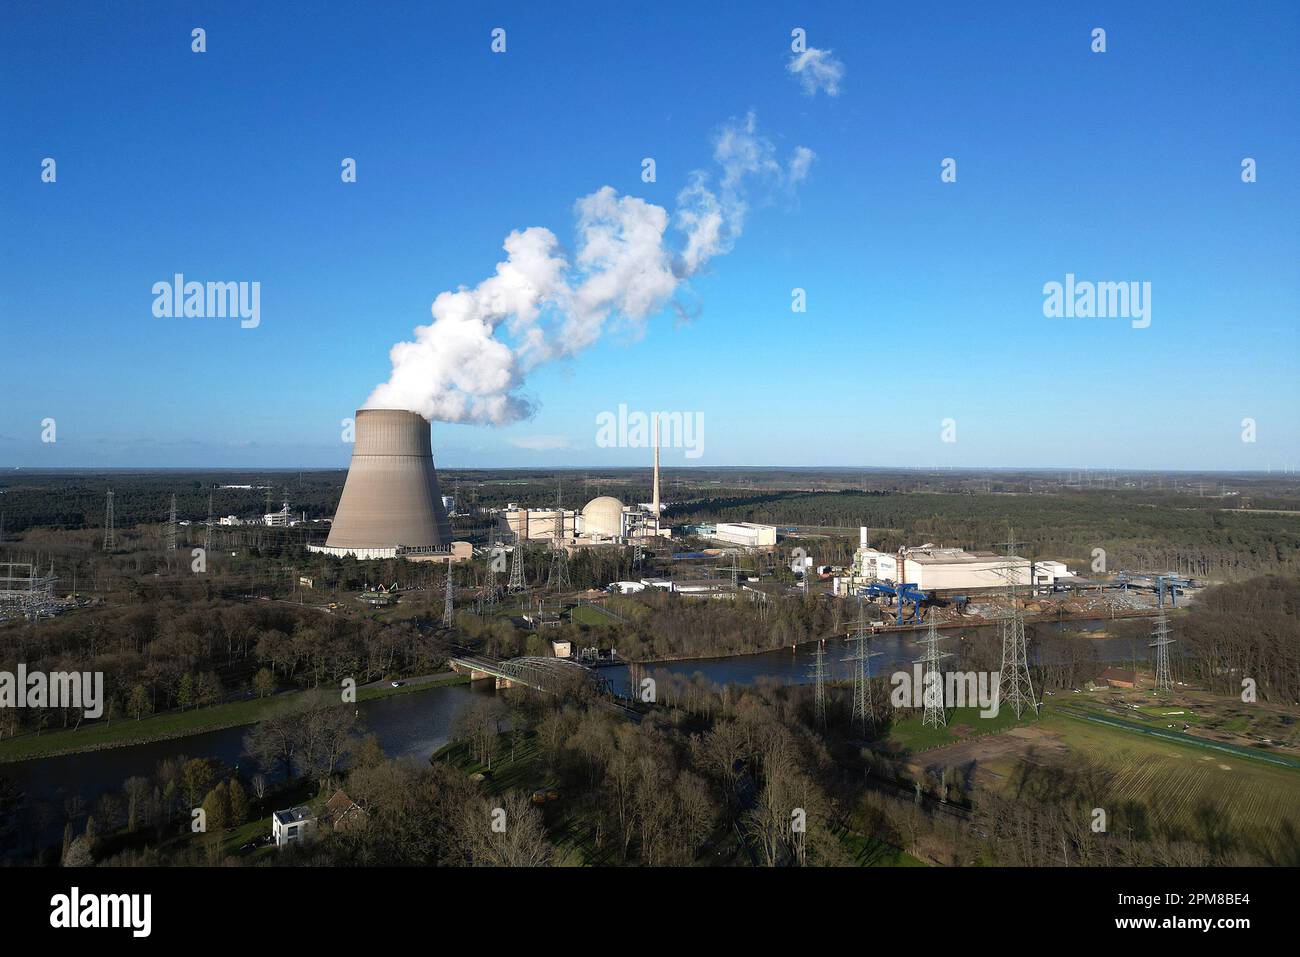 Atomkraftwerk in Lingen / Emsland / Niedersachsen / Deutschland / nuclear power plant / npp / Germany Stock Photo